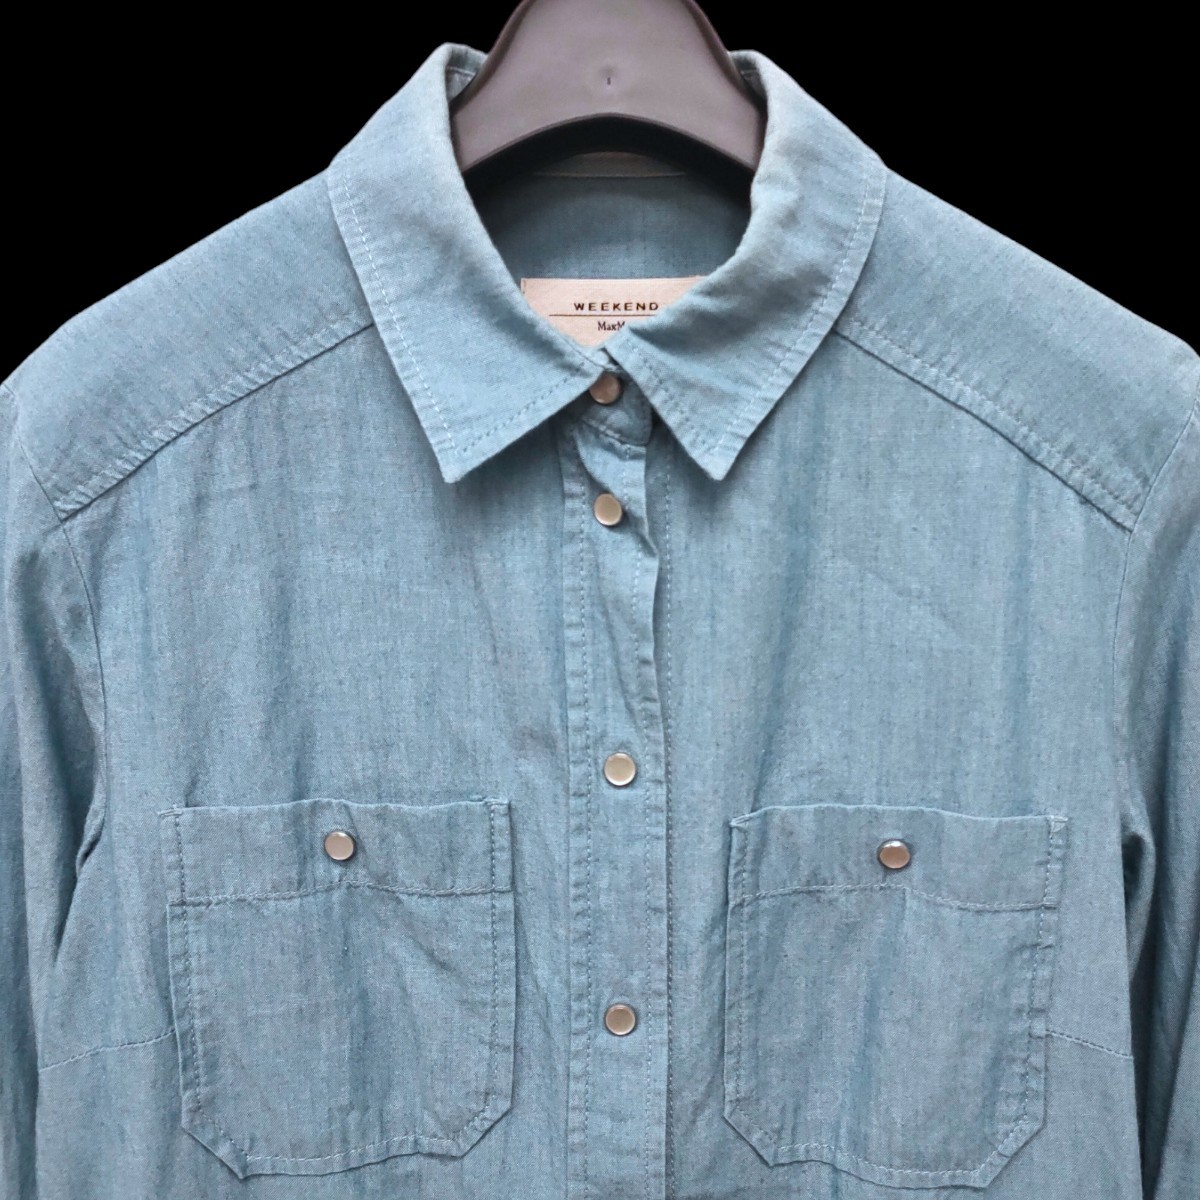 MAX MARA WEEKEND LINE / Max Mara женский автомобиль n пятно - рубашка рубашка с длинным рукавом кнопка-застежка голубой 38 размер I-3258